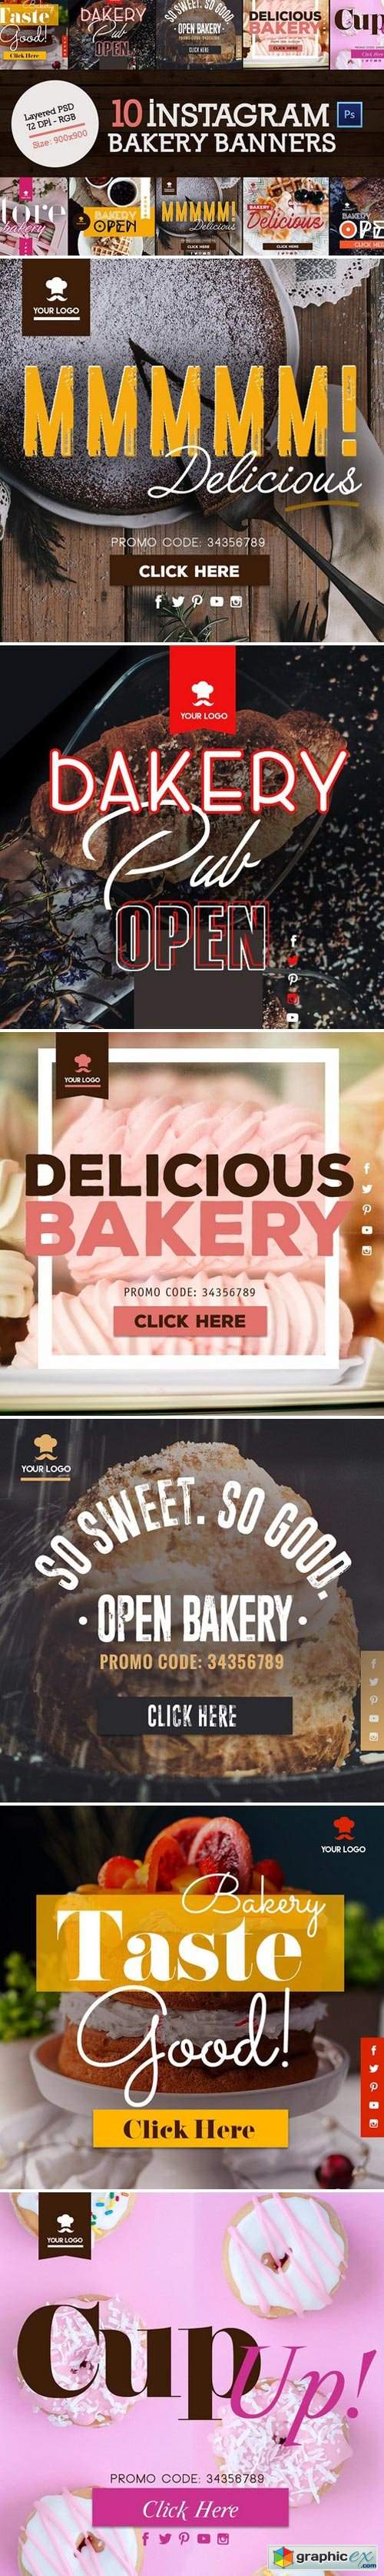 10 Instagram Bakery Banners